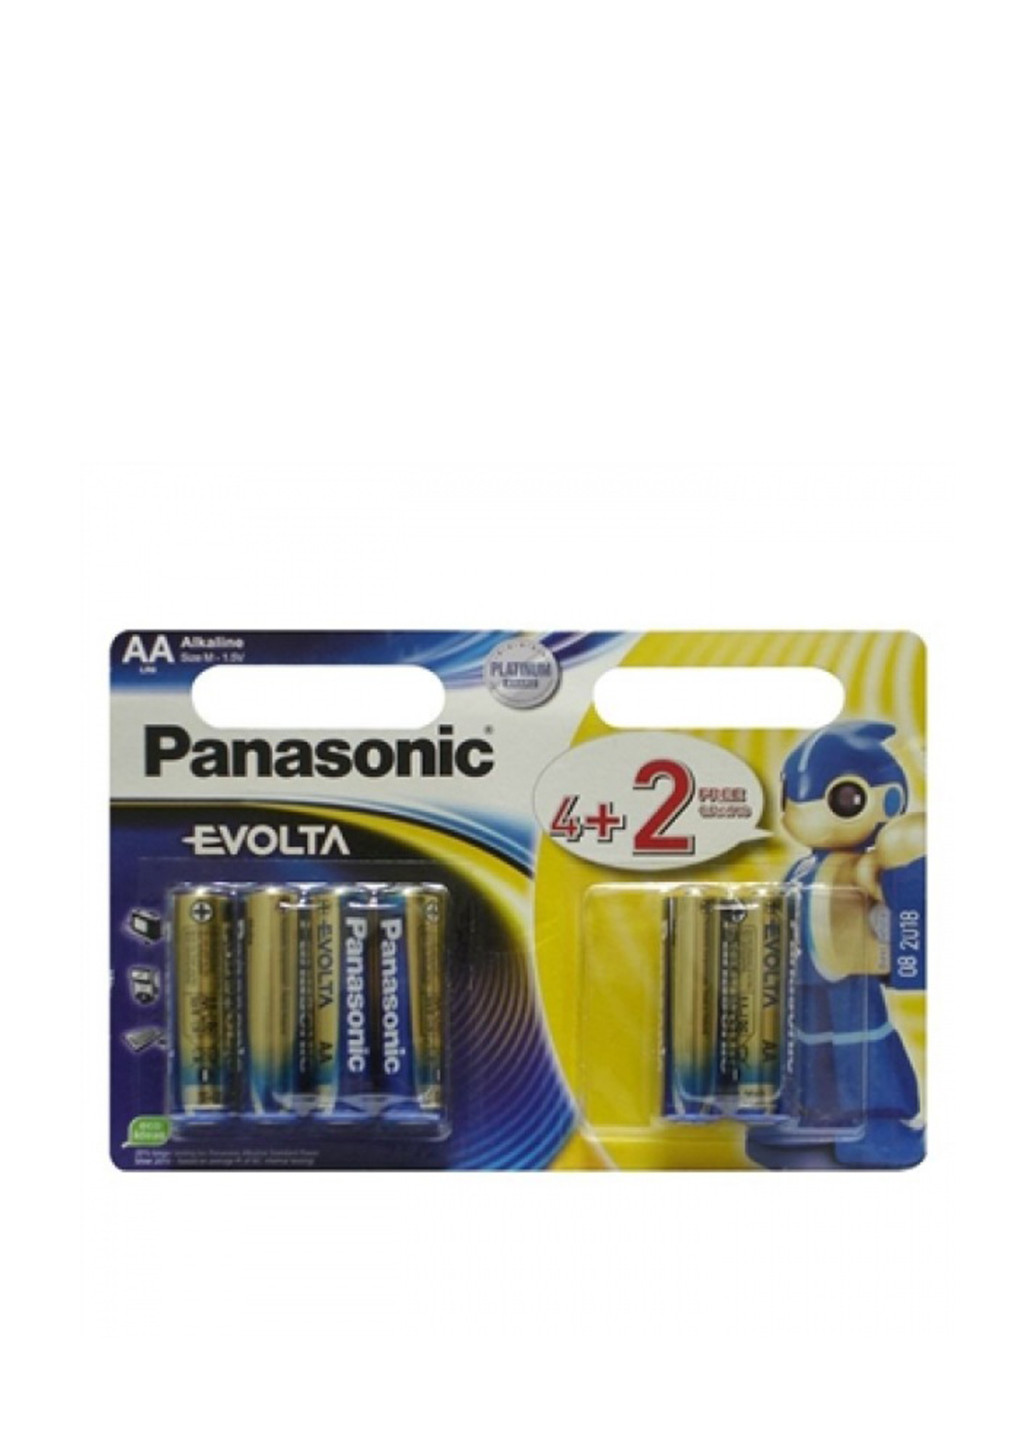 Батарейка EVOLTA AA BLI (4 + 2) ALKALINE (LR6EGE / 6B2F) Panasonic evolta aa bli(4+2) alkaline (lr6ege/6b2f) (138004303)